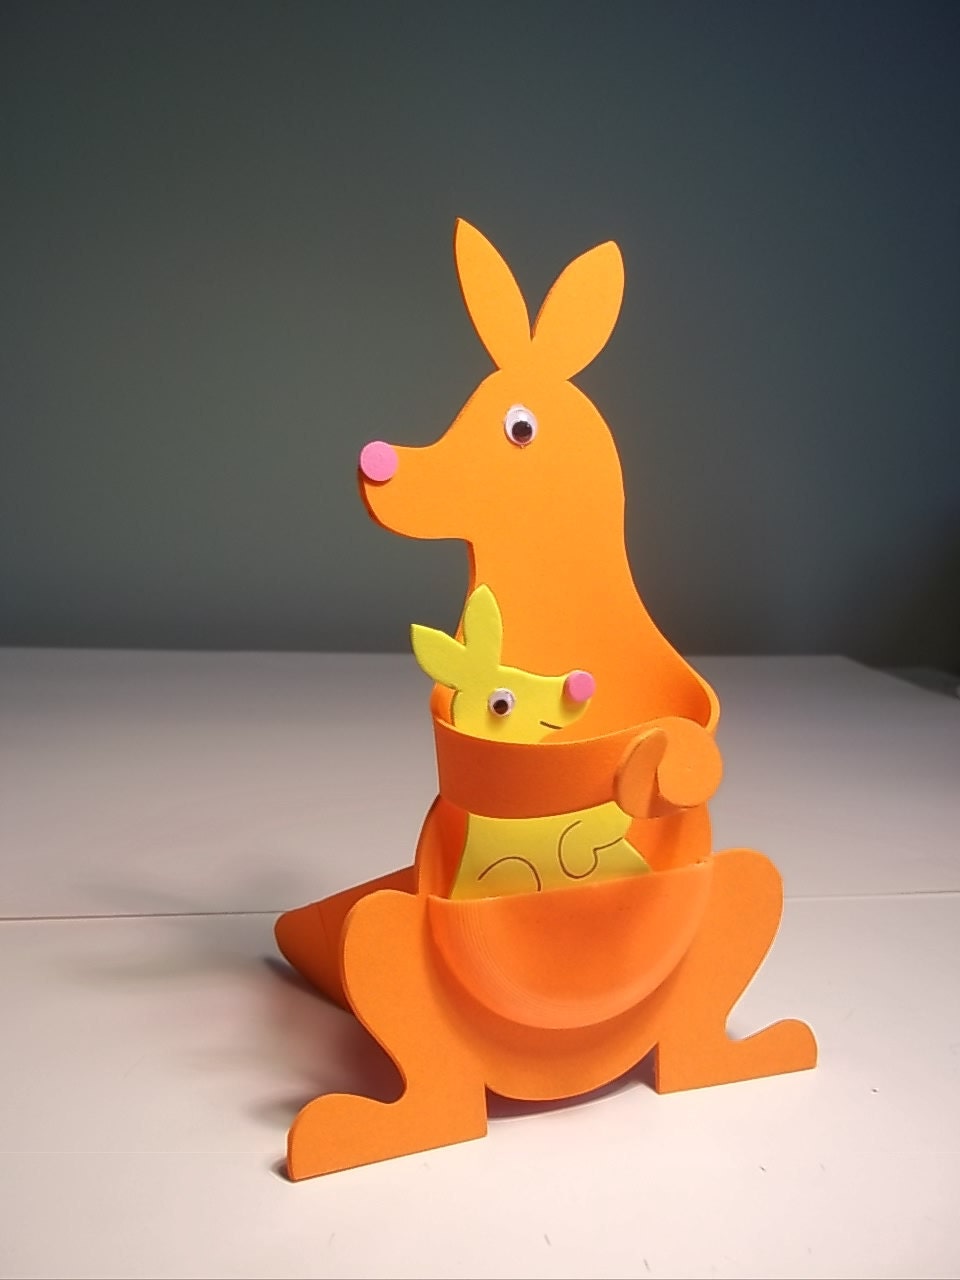 k-is-for-kangaroo-craft-kit-by-kazsmom-on-etsy